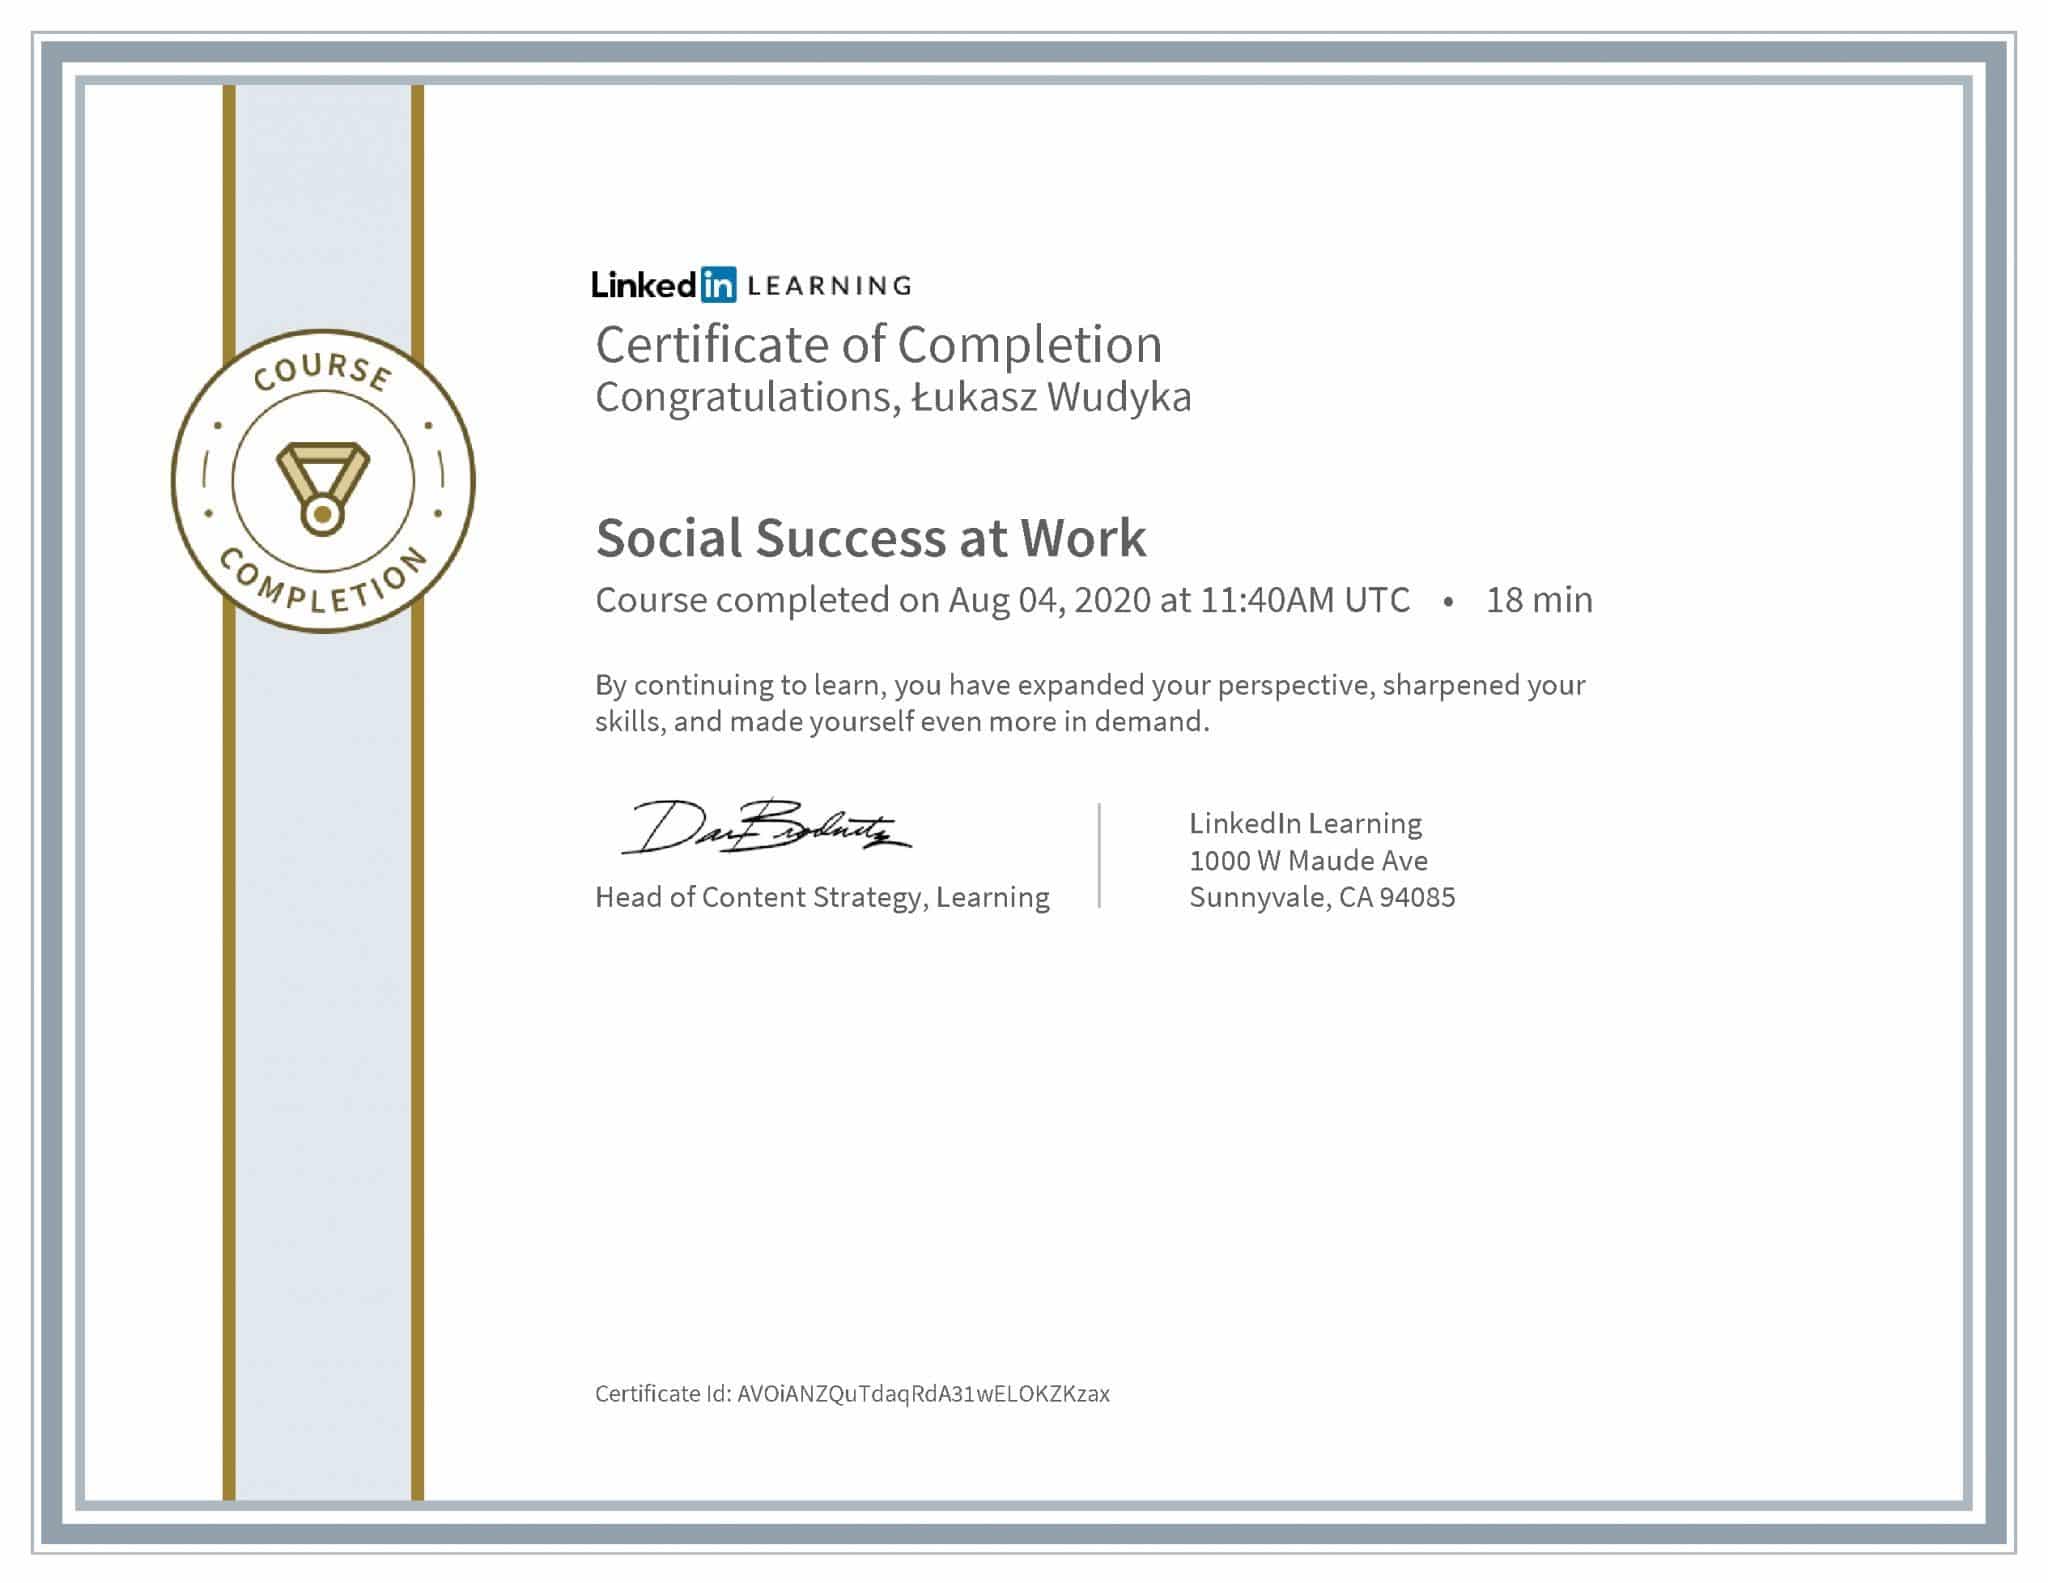 Łukasz Wudyka certyfikat LinkedIn Social Success at Work